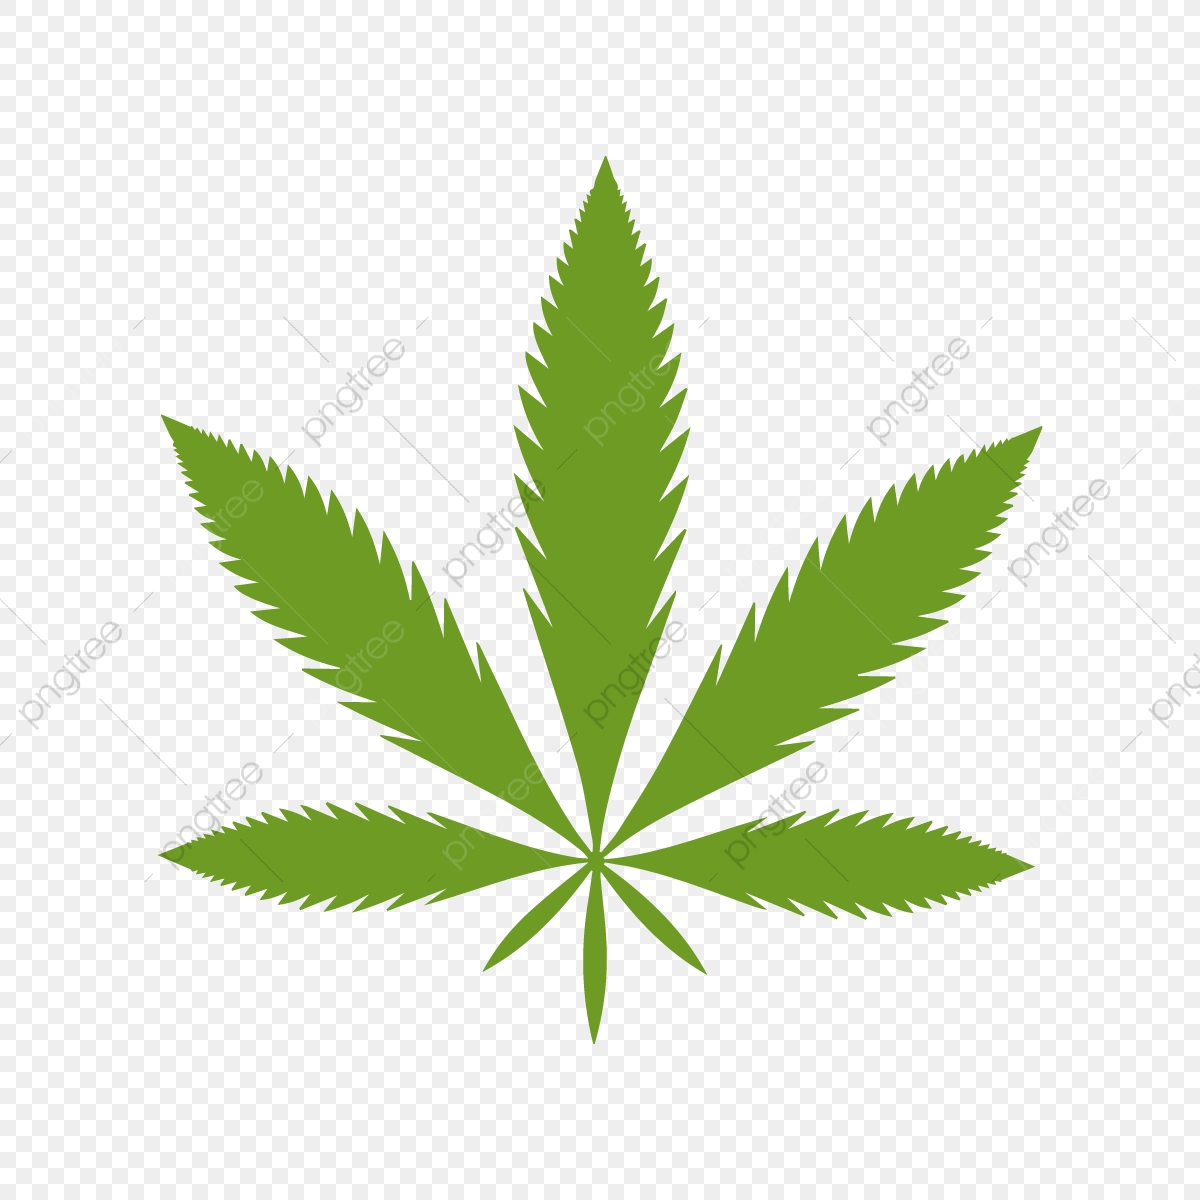 Cannabis Or Marijuana, Cannabis, Marijuana PNG and Vector with.